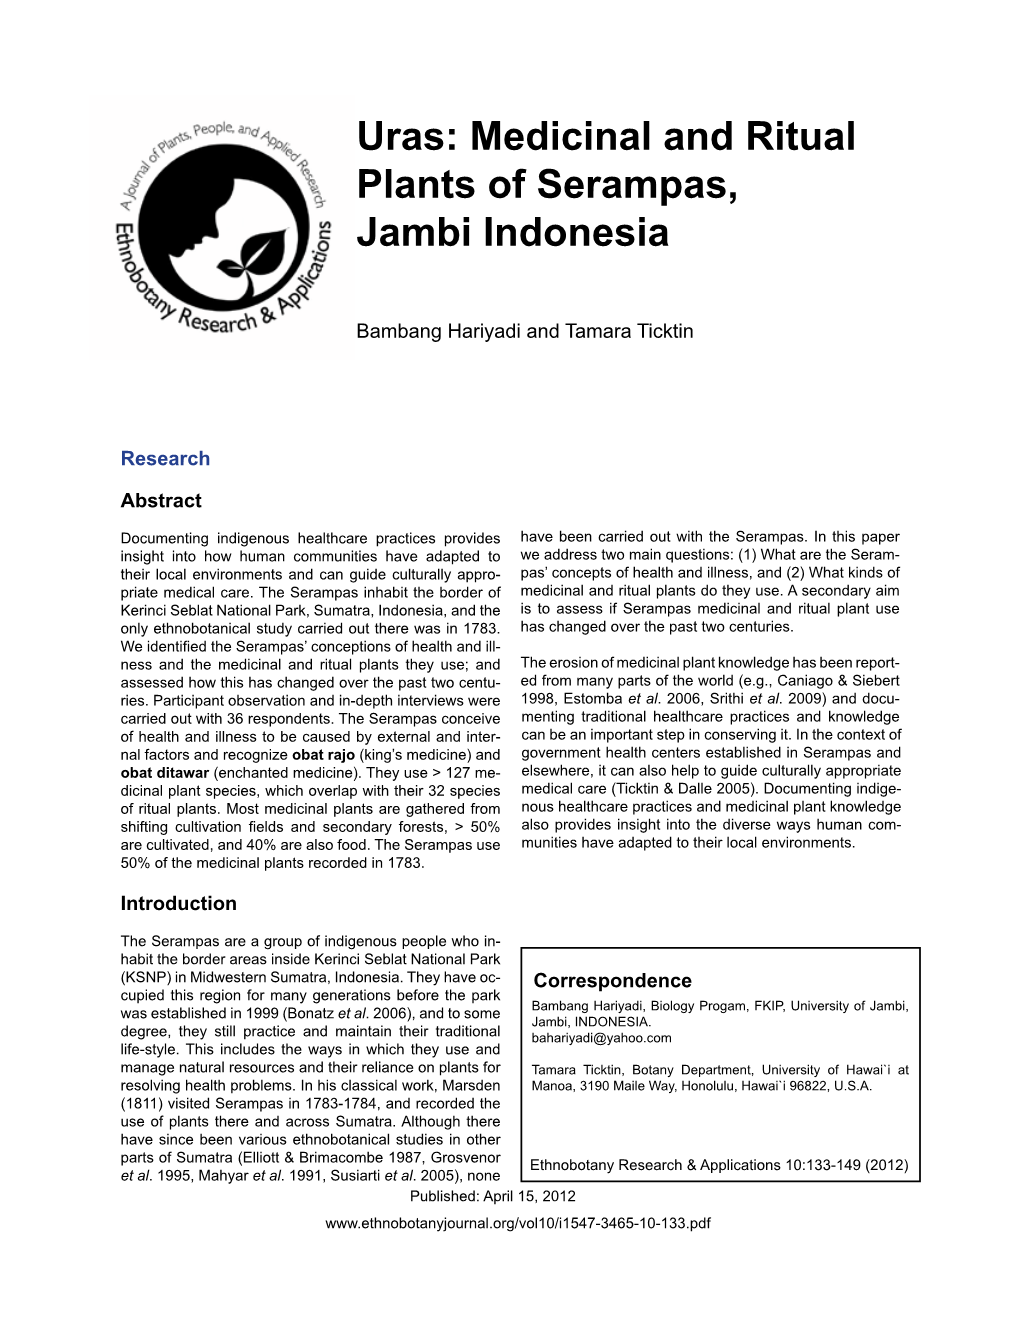 Uras: Medicinal and Ritual Plants of Serampas, Jambi Indonesia